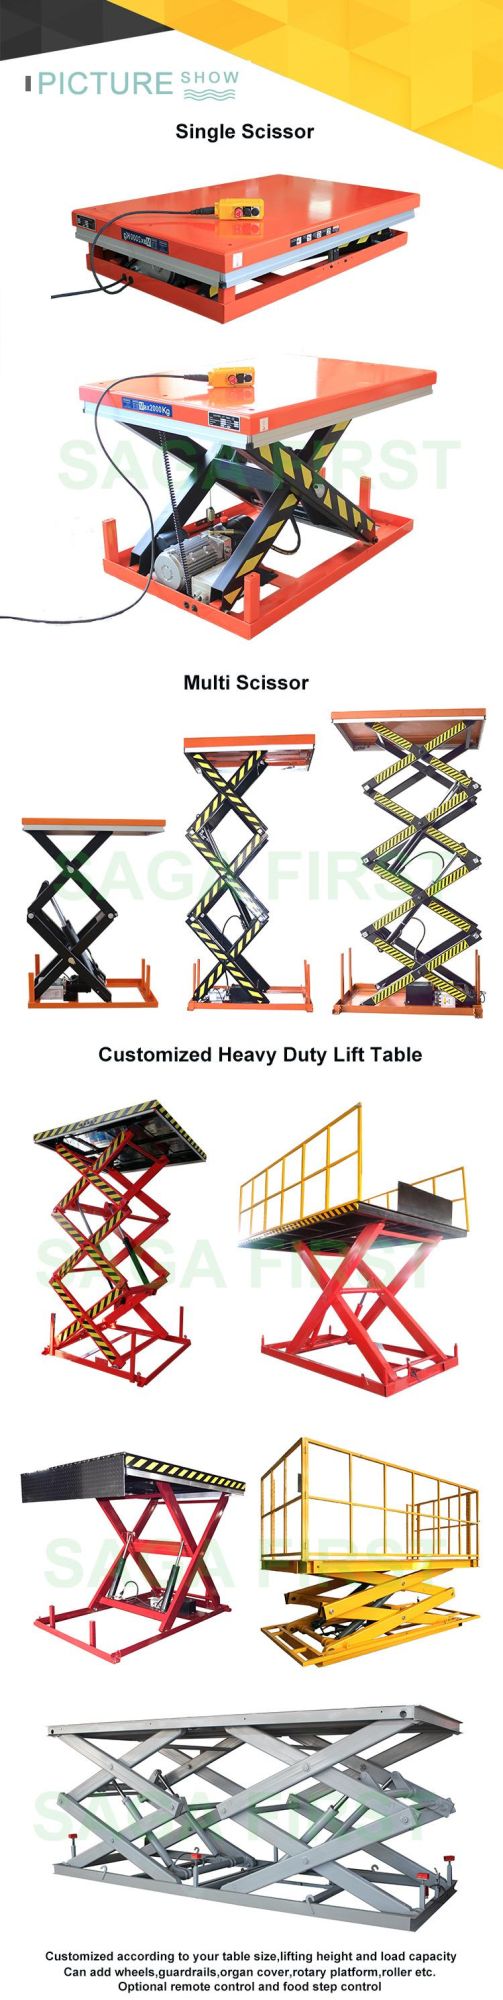 China Small Stationary Materials Construction Electric Scissor Lift